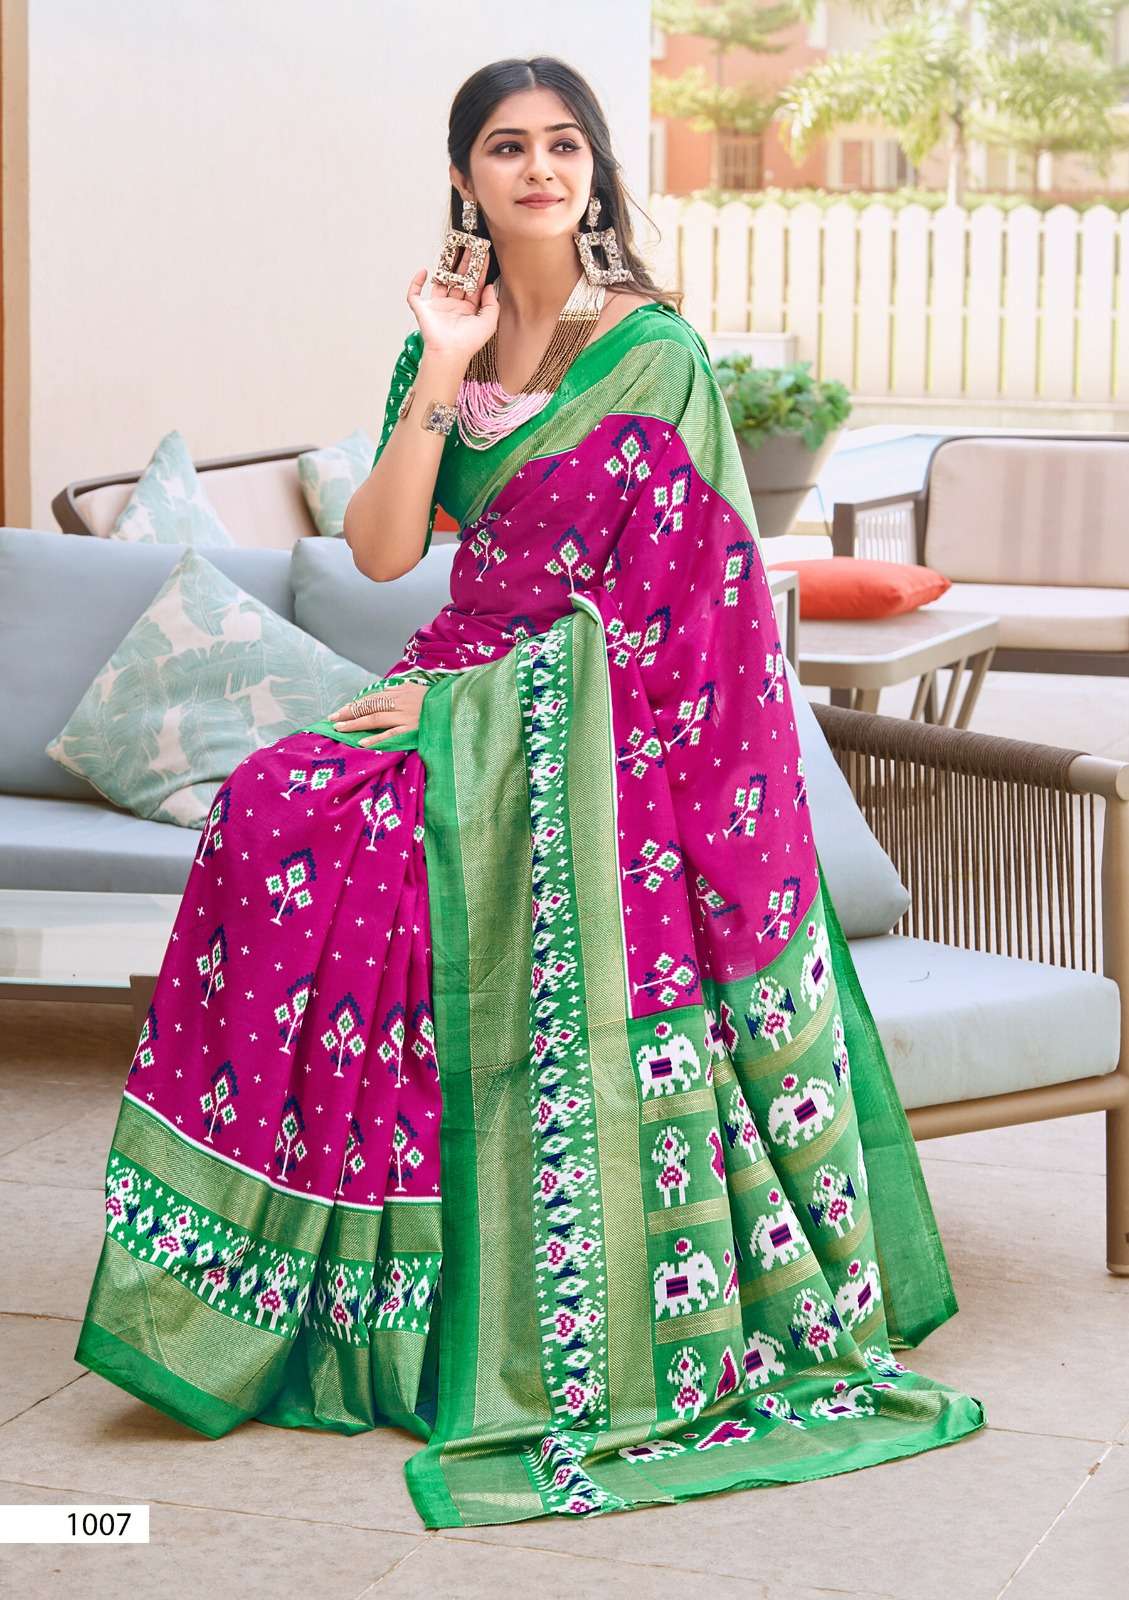 saroj ikkaya patola vol 3 cotton silk catchy look saree catalog